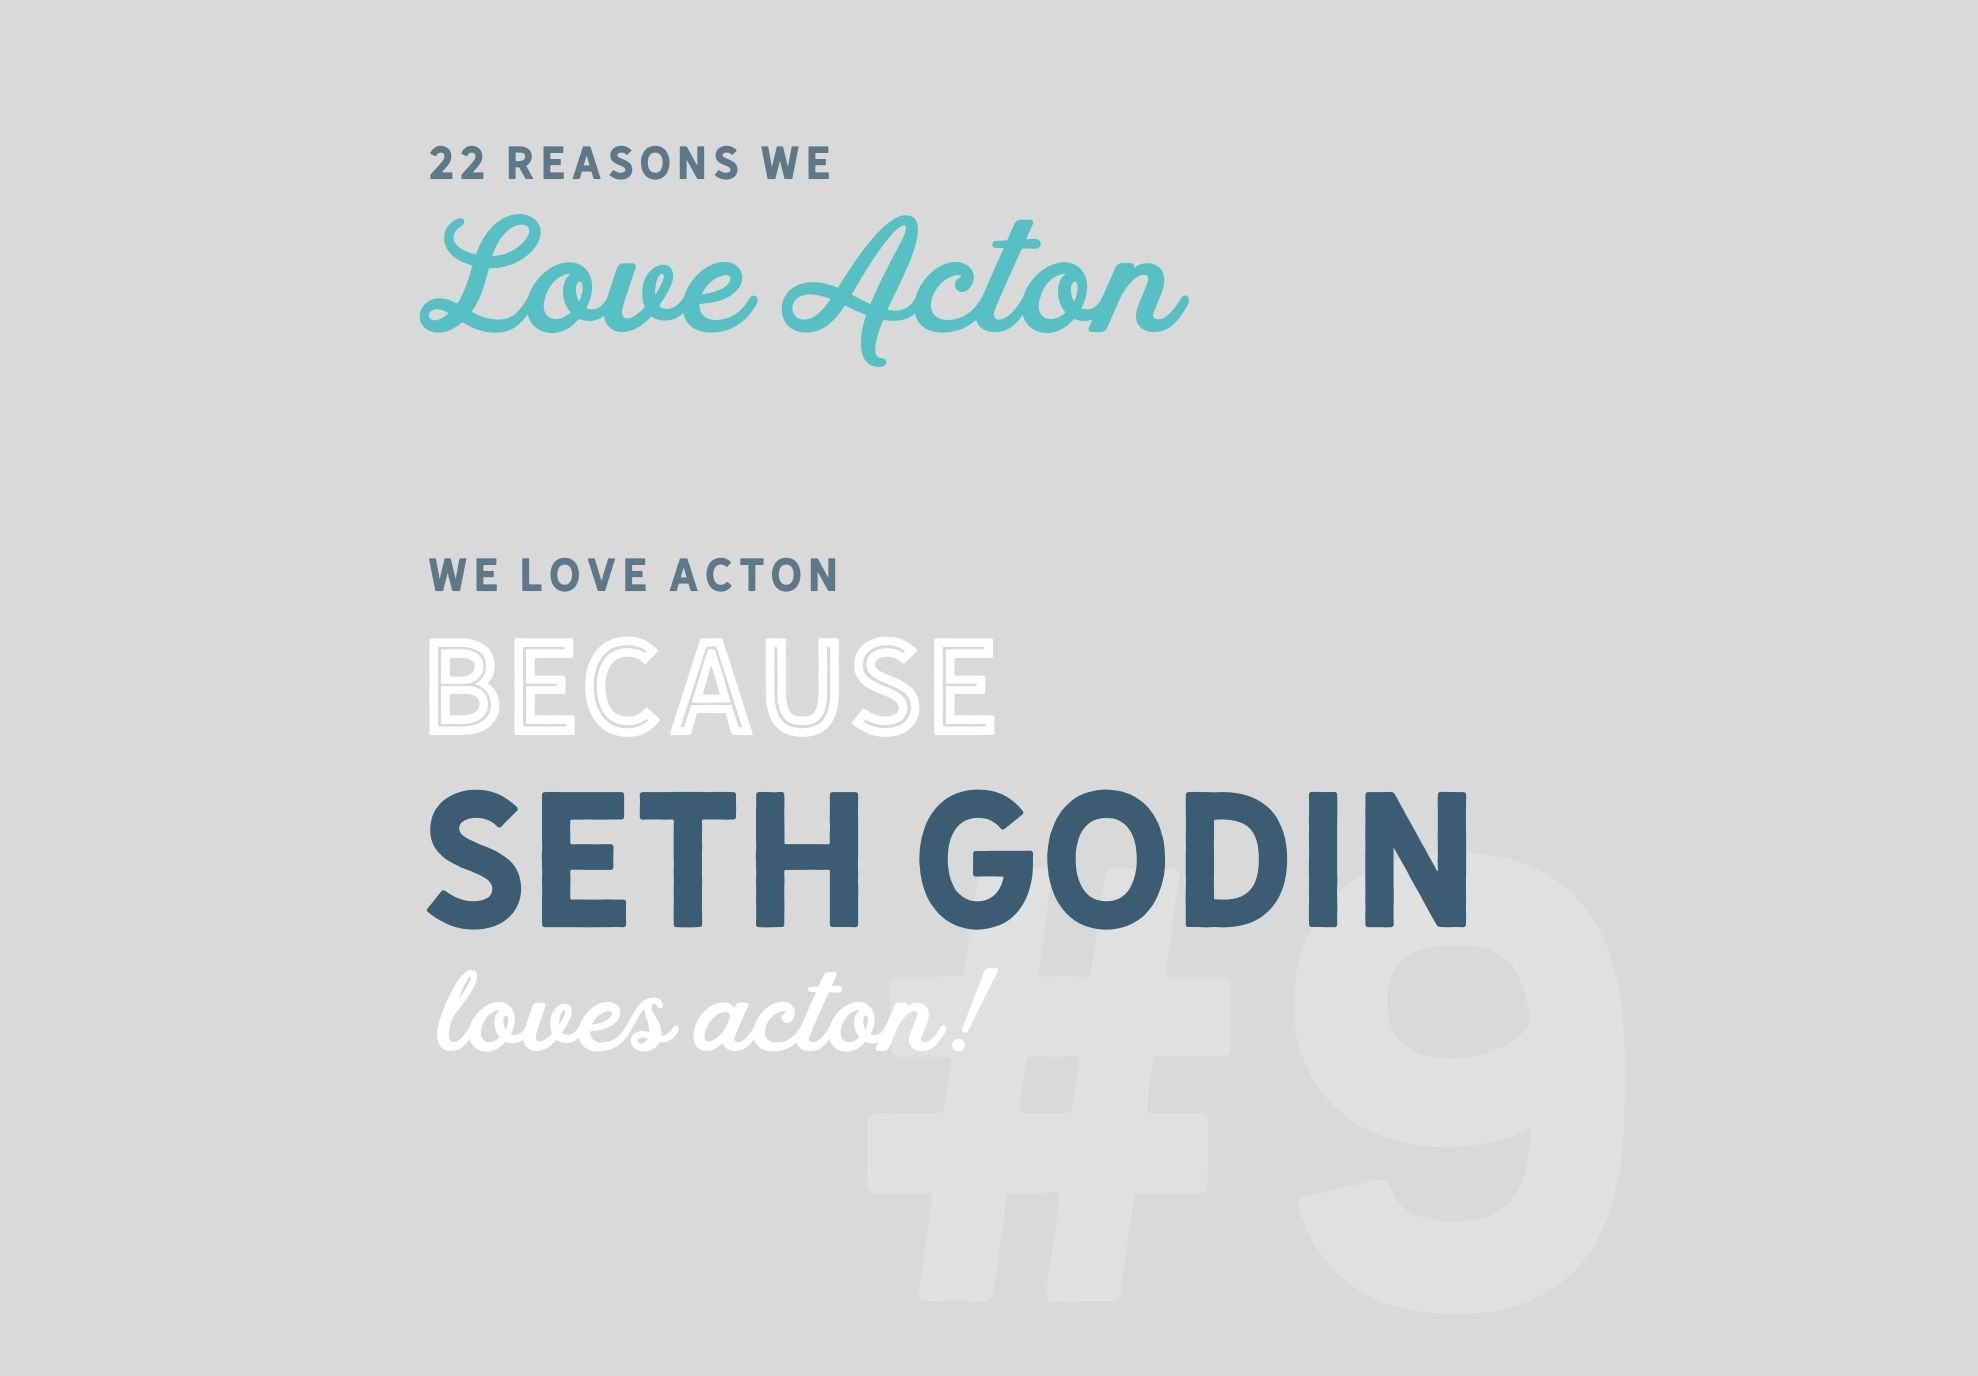 #9 We Love Acton Because Seth Godin Loves Acton!